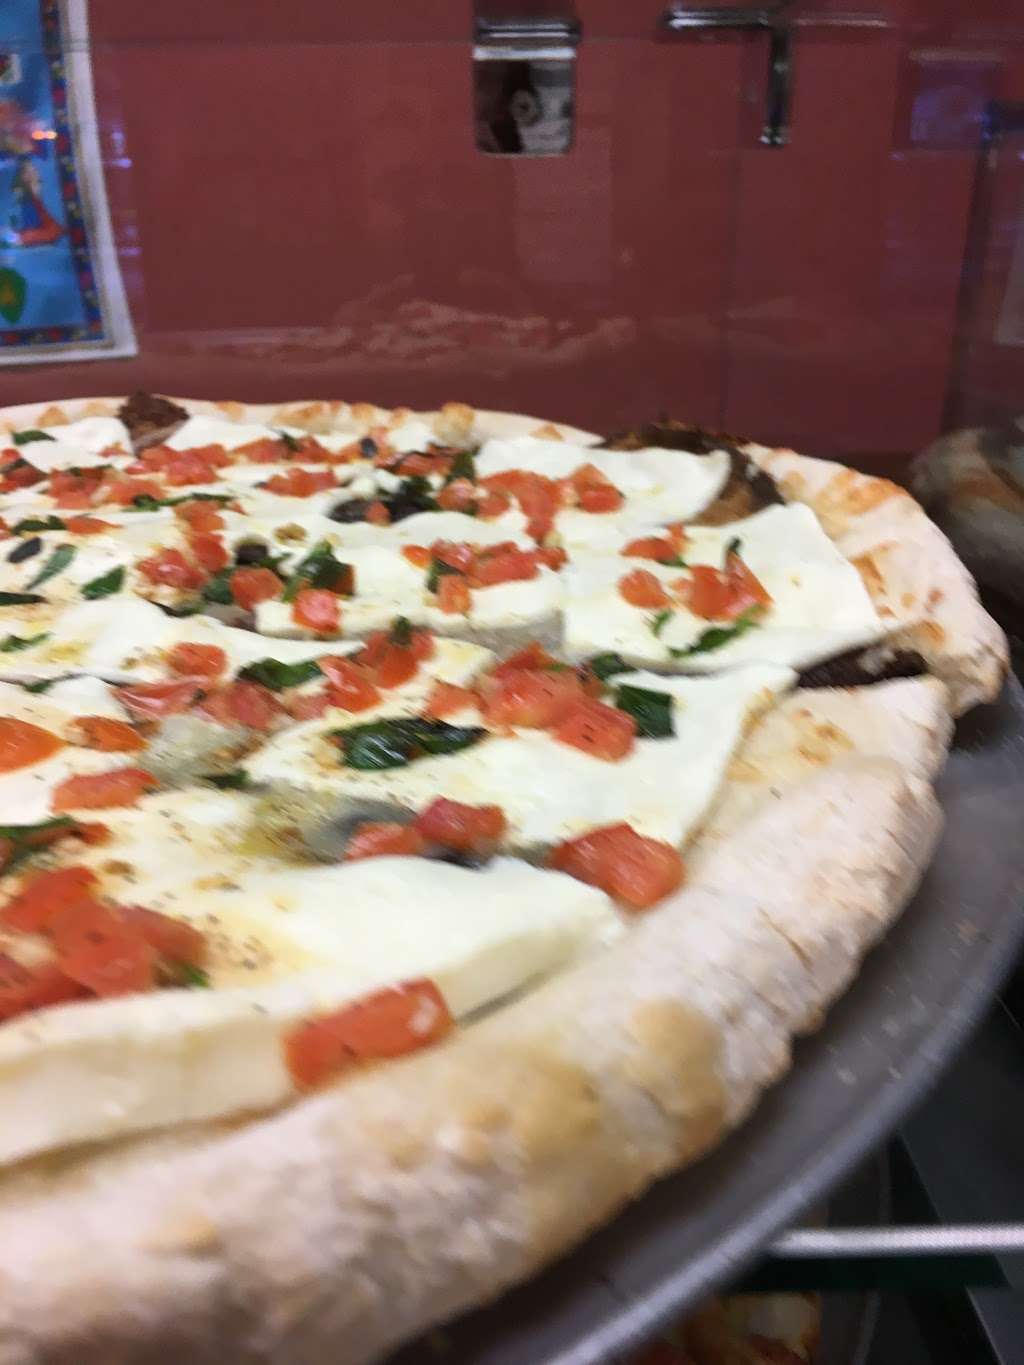 Giovannis Pizza | 1009 Little E Neck Rd, West Babylon, NY 11704 | Phone: (631) 669-9507